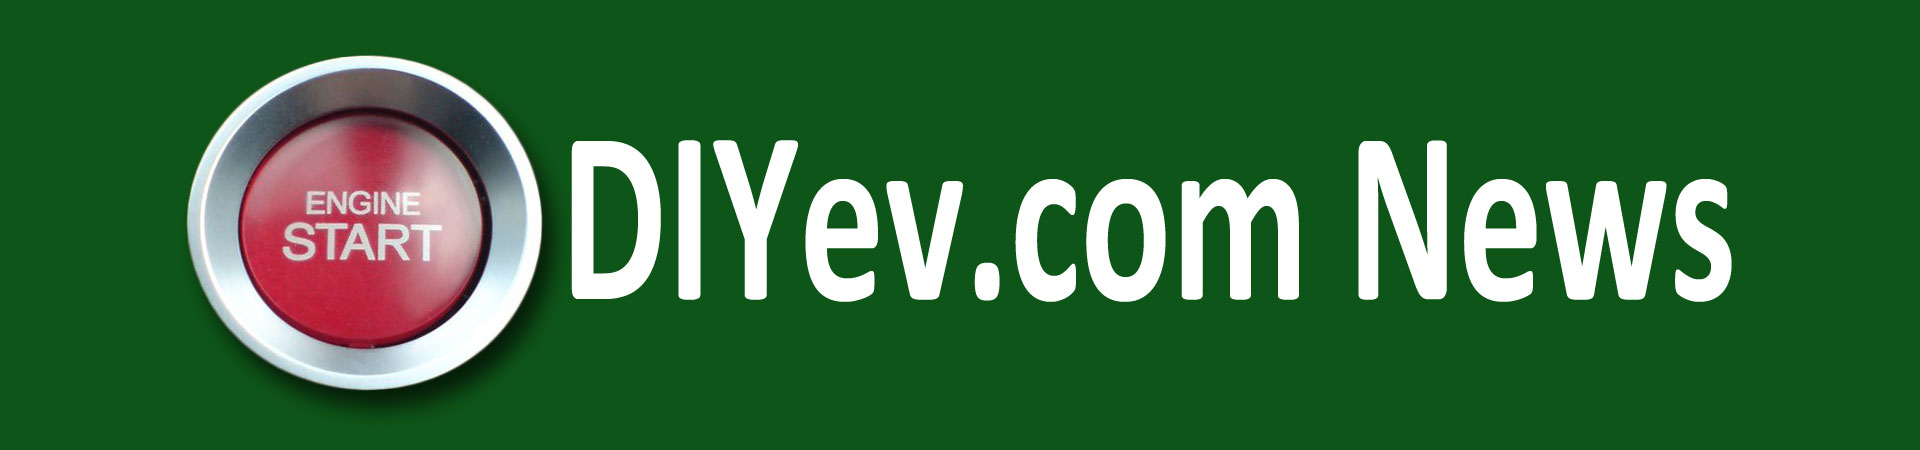 Diyev News Banner